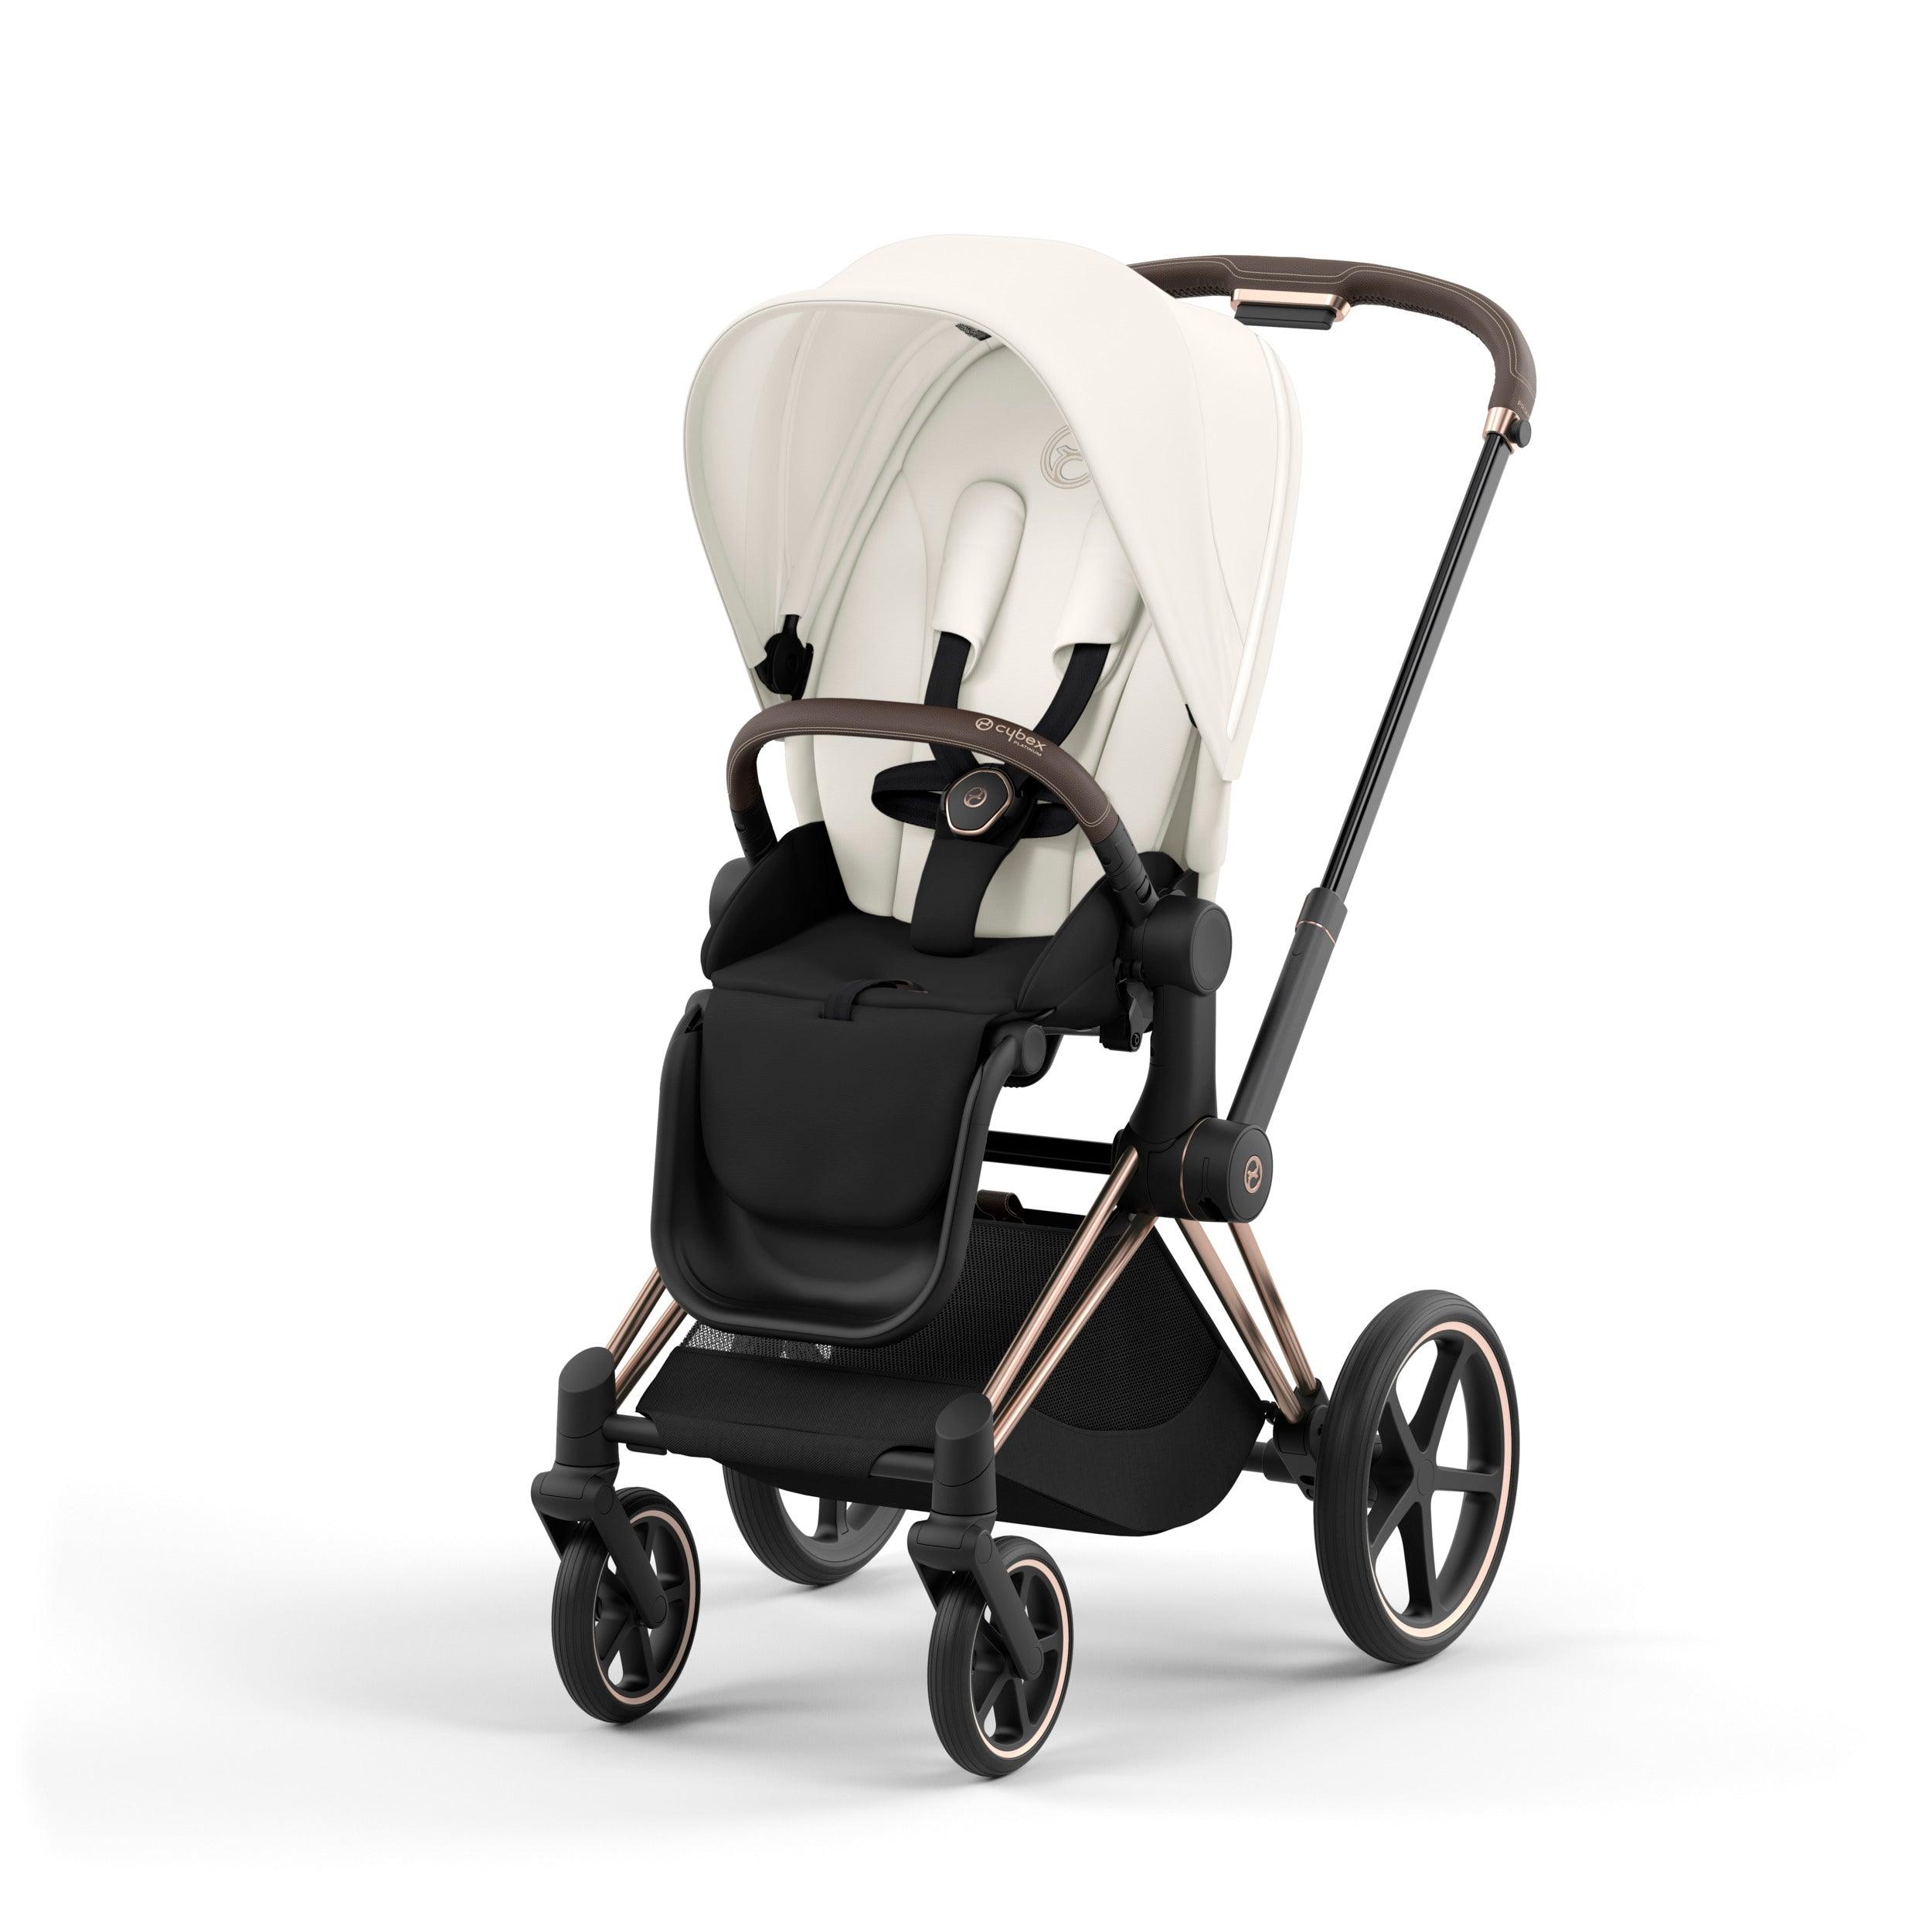 CYBEX Priam Baby Stroller in Offwhite & Rosegold Frame